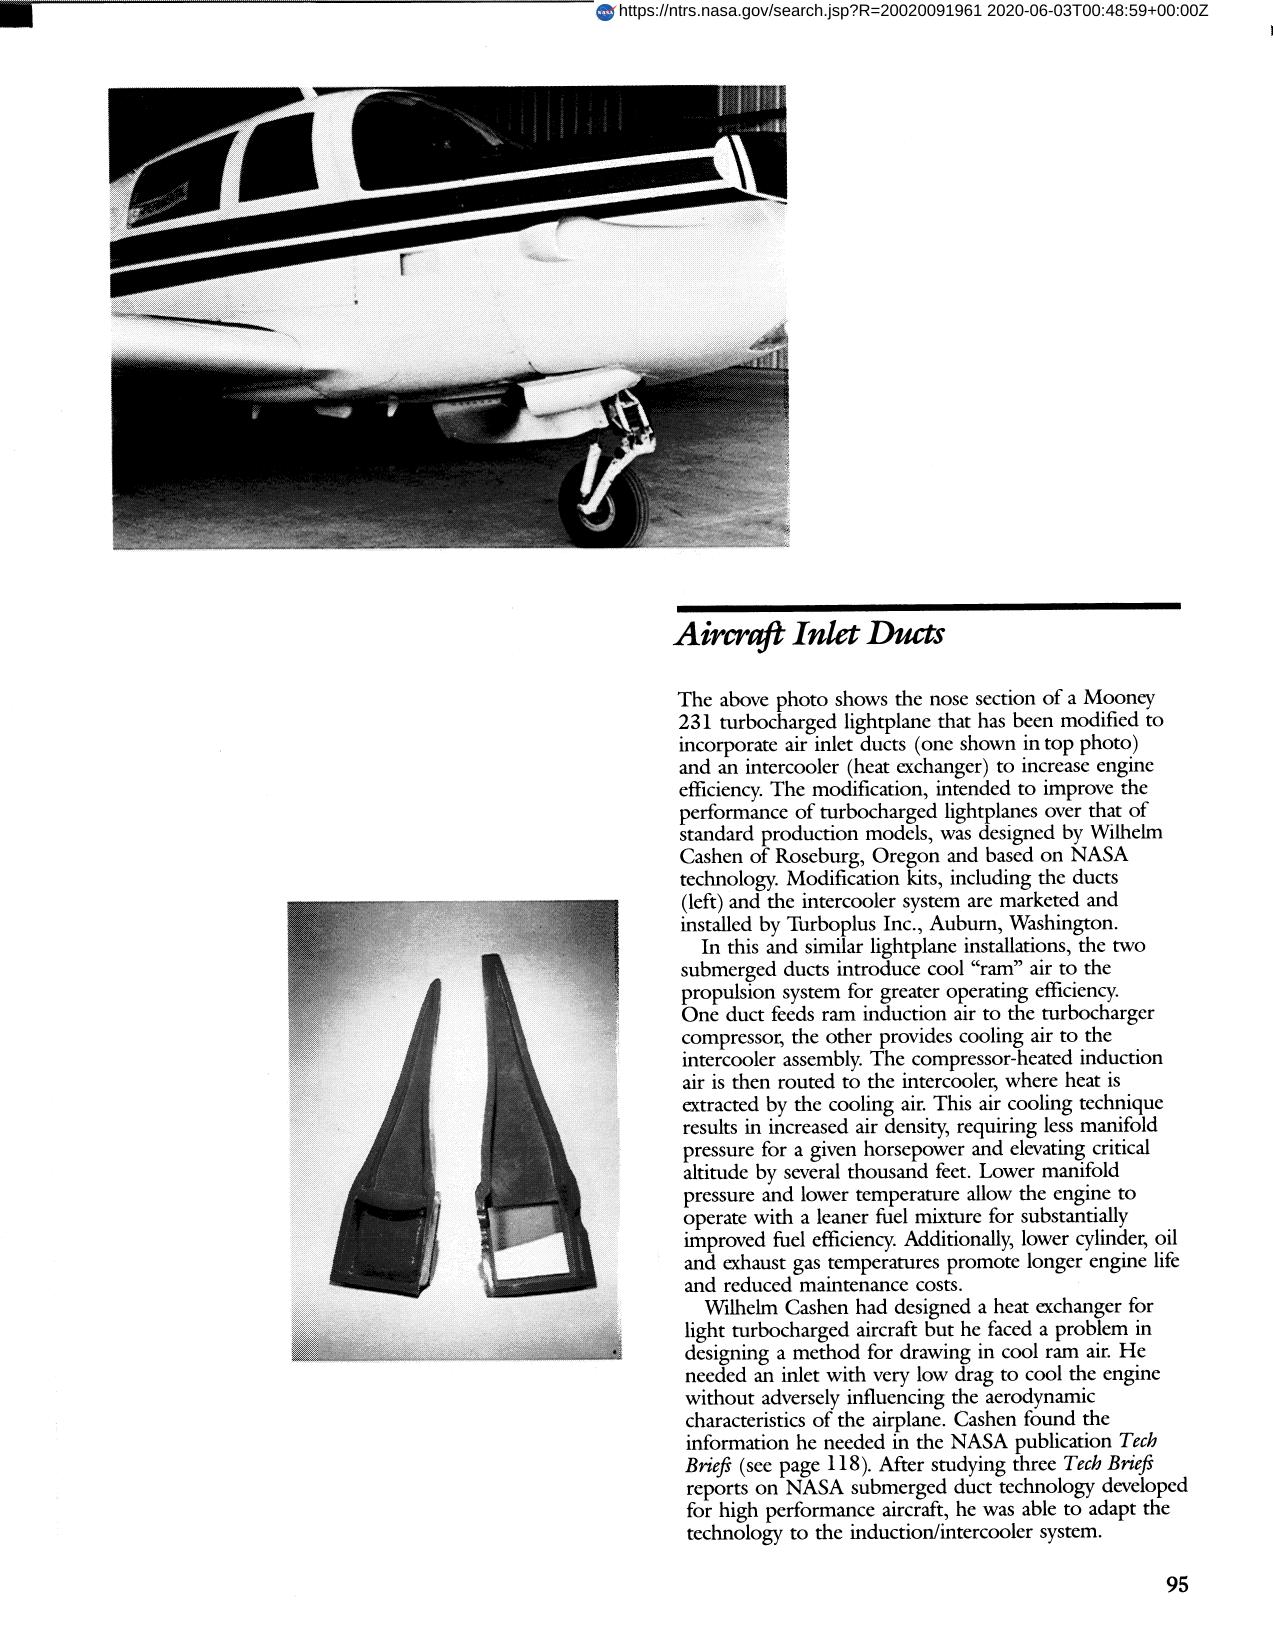 Aircraft Inlet Ducts | Nasa Spinoff